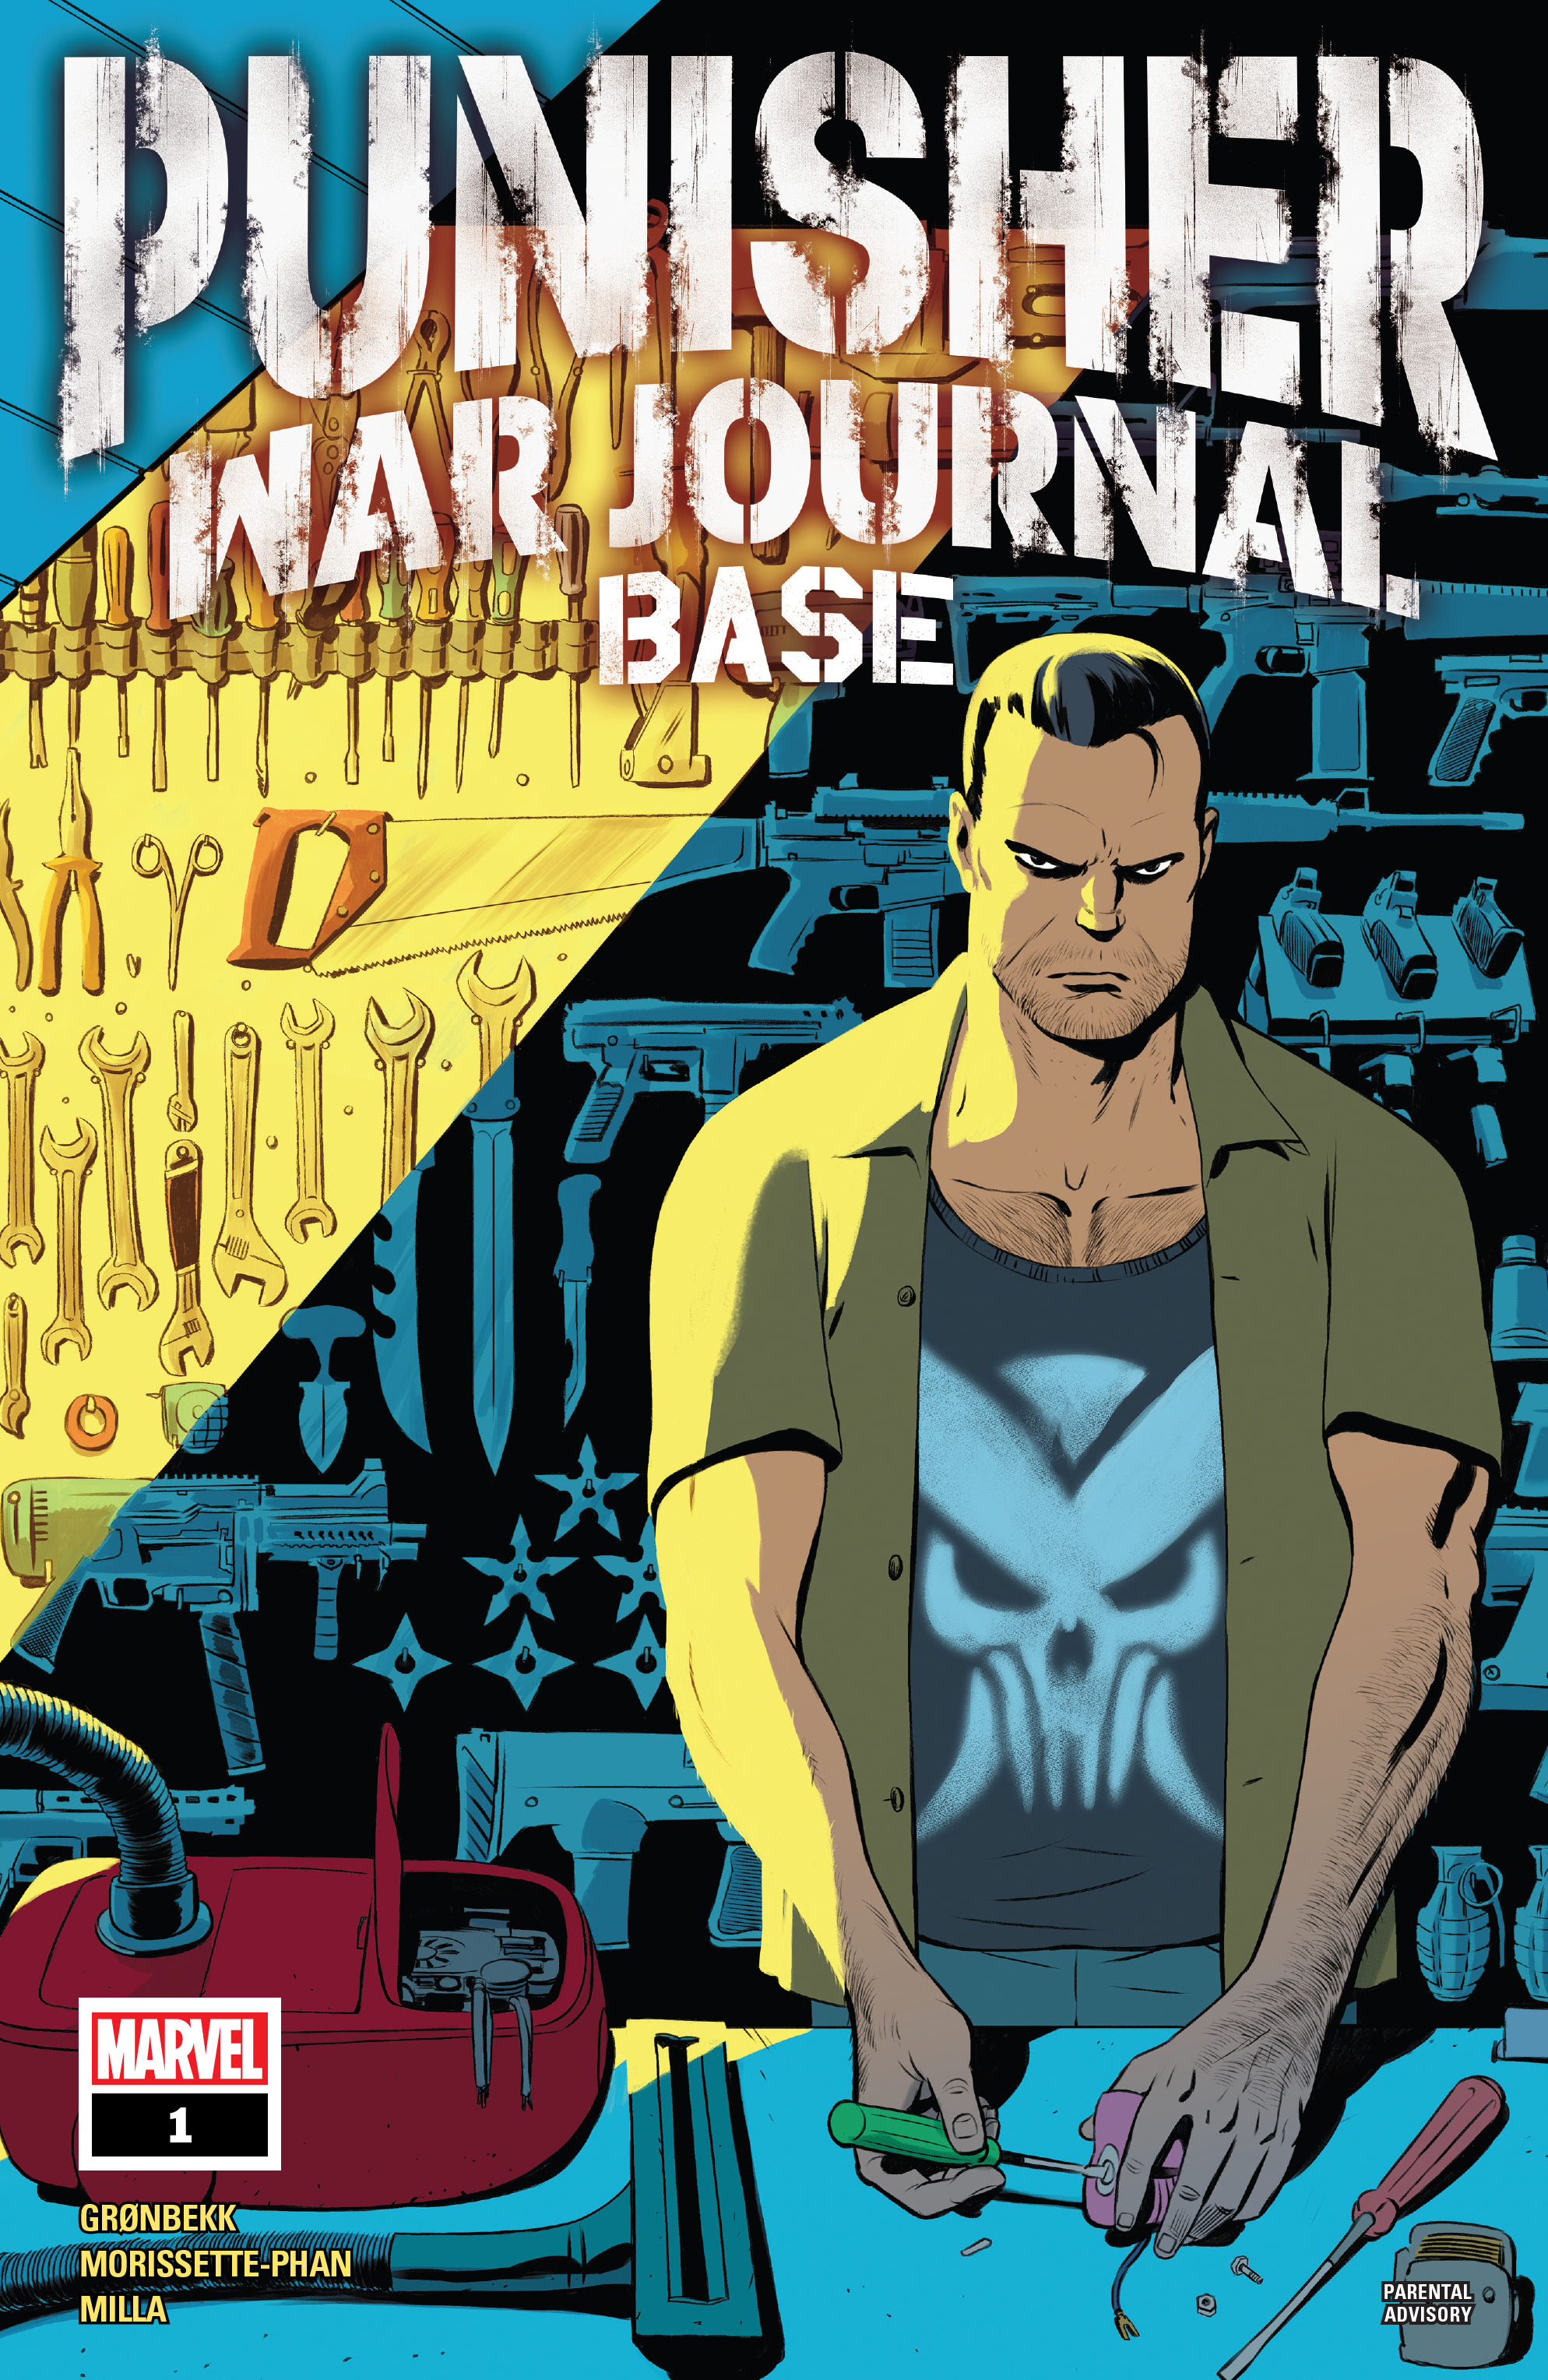 Read online Punisher War Journal: Base comic -  Issue #1 - 1